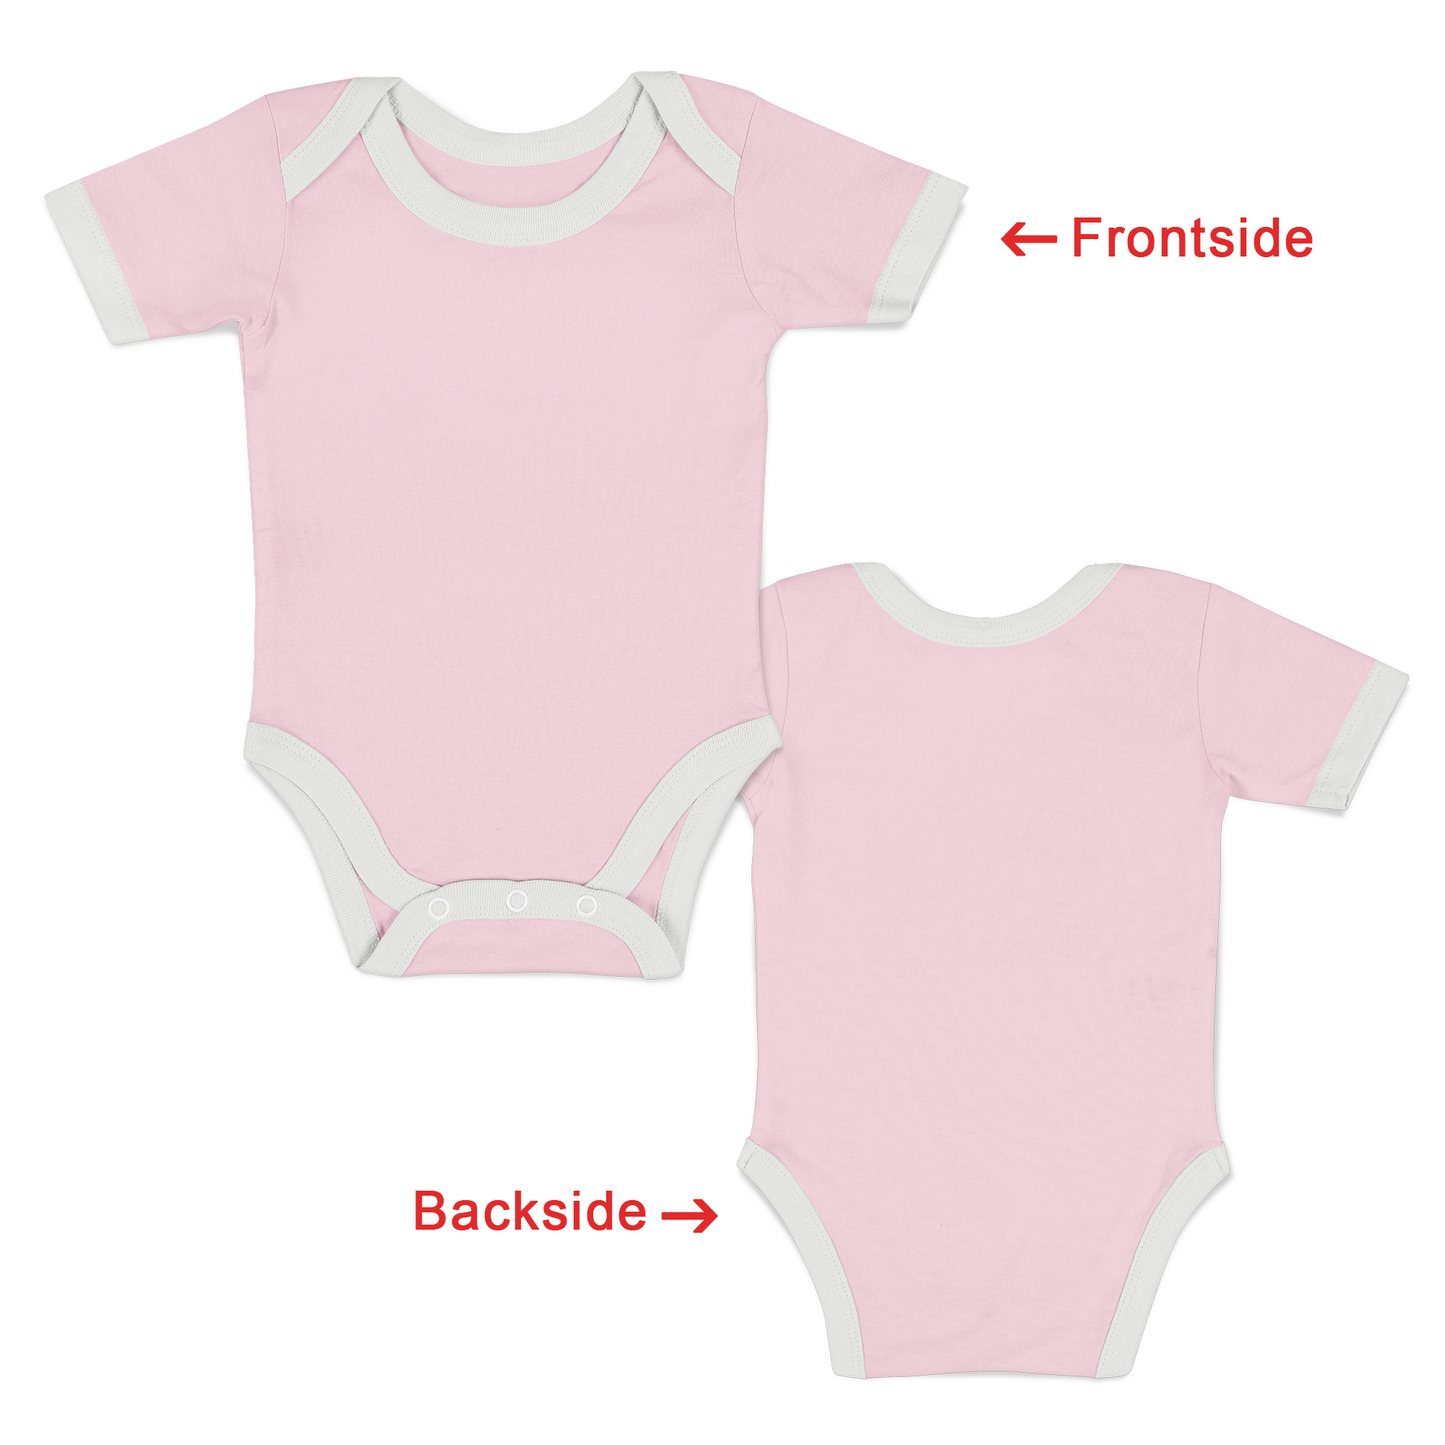 [Custom TEXT] Sports Team I Front & Back I Organic Baby Bodysuit Short Sleeve